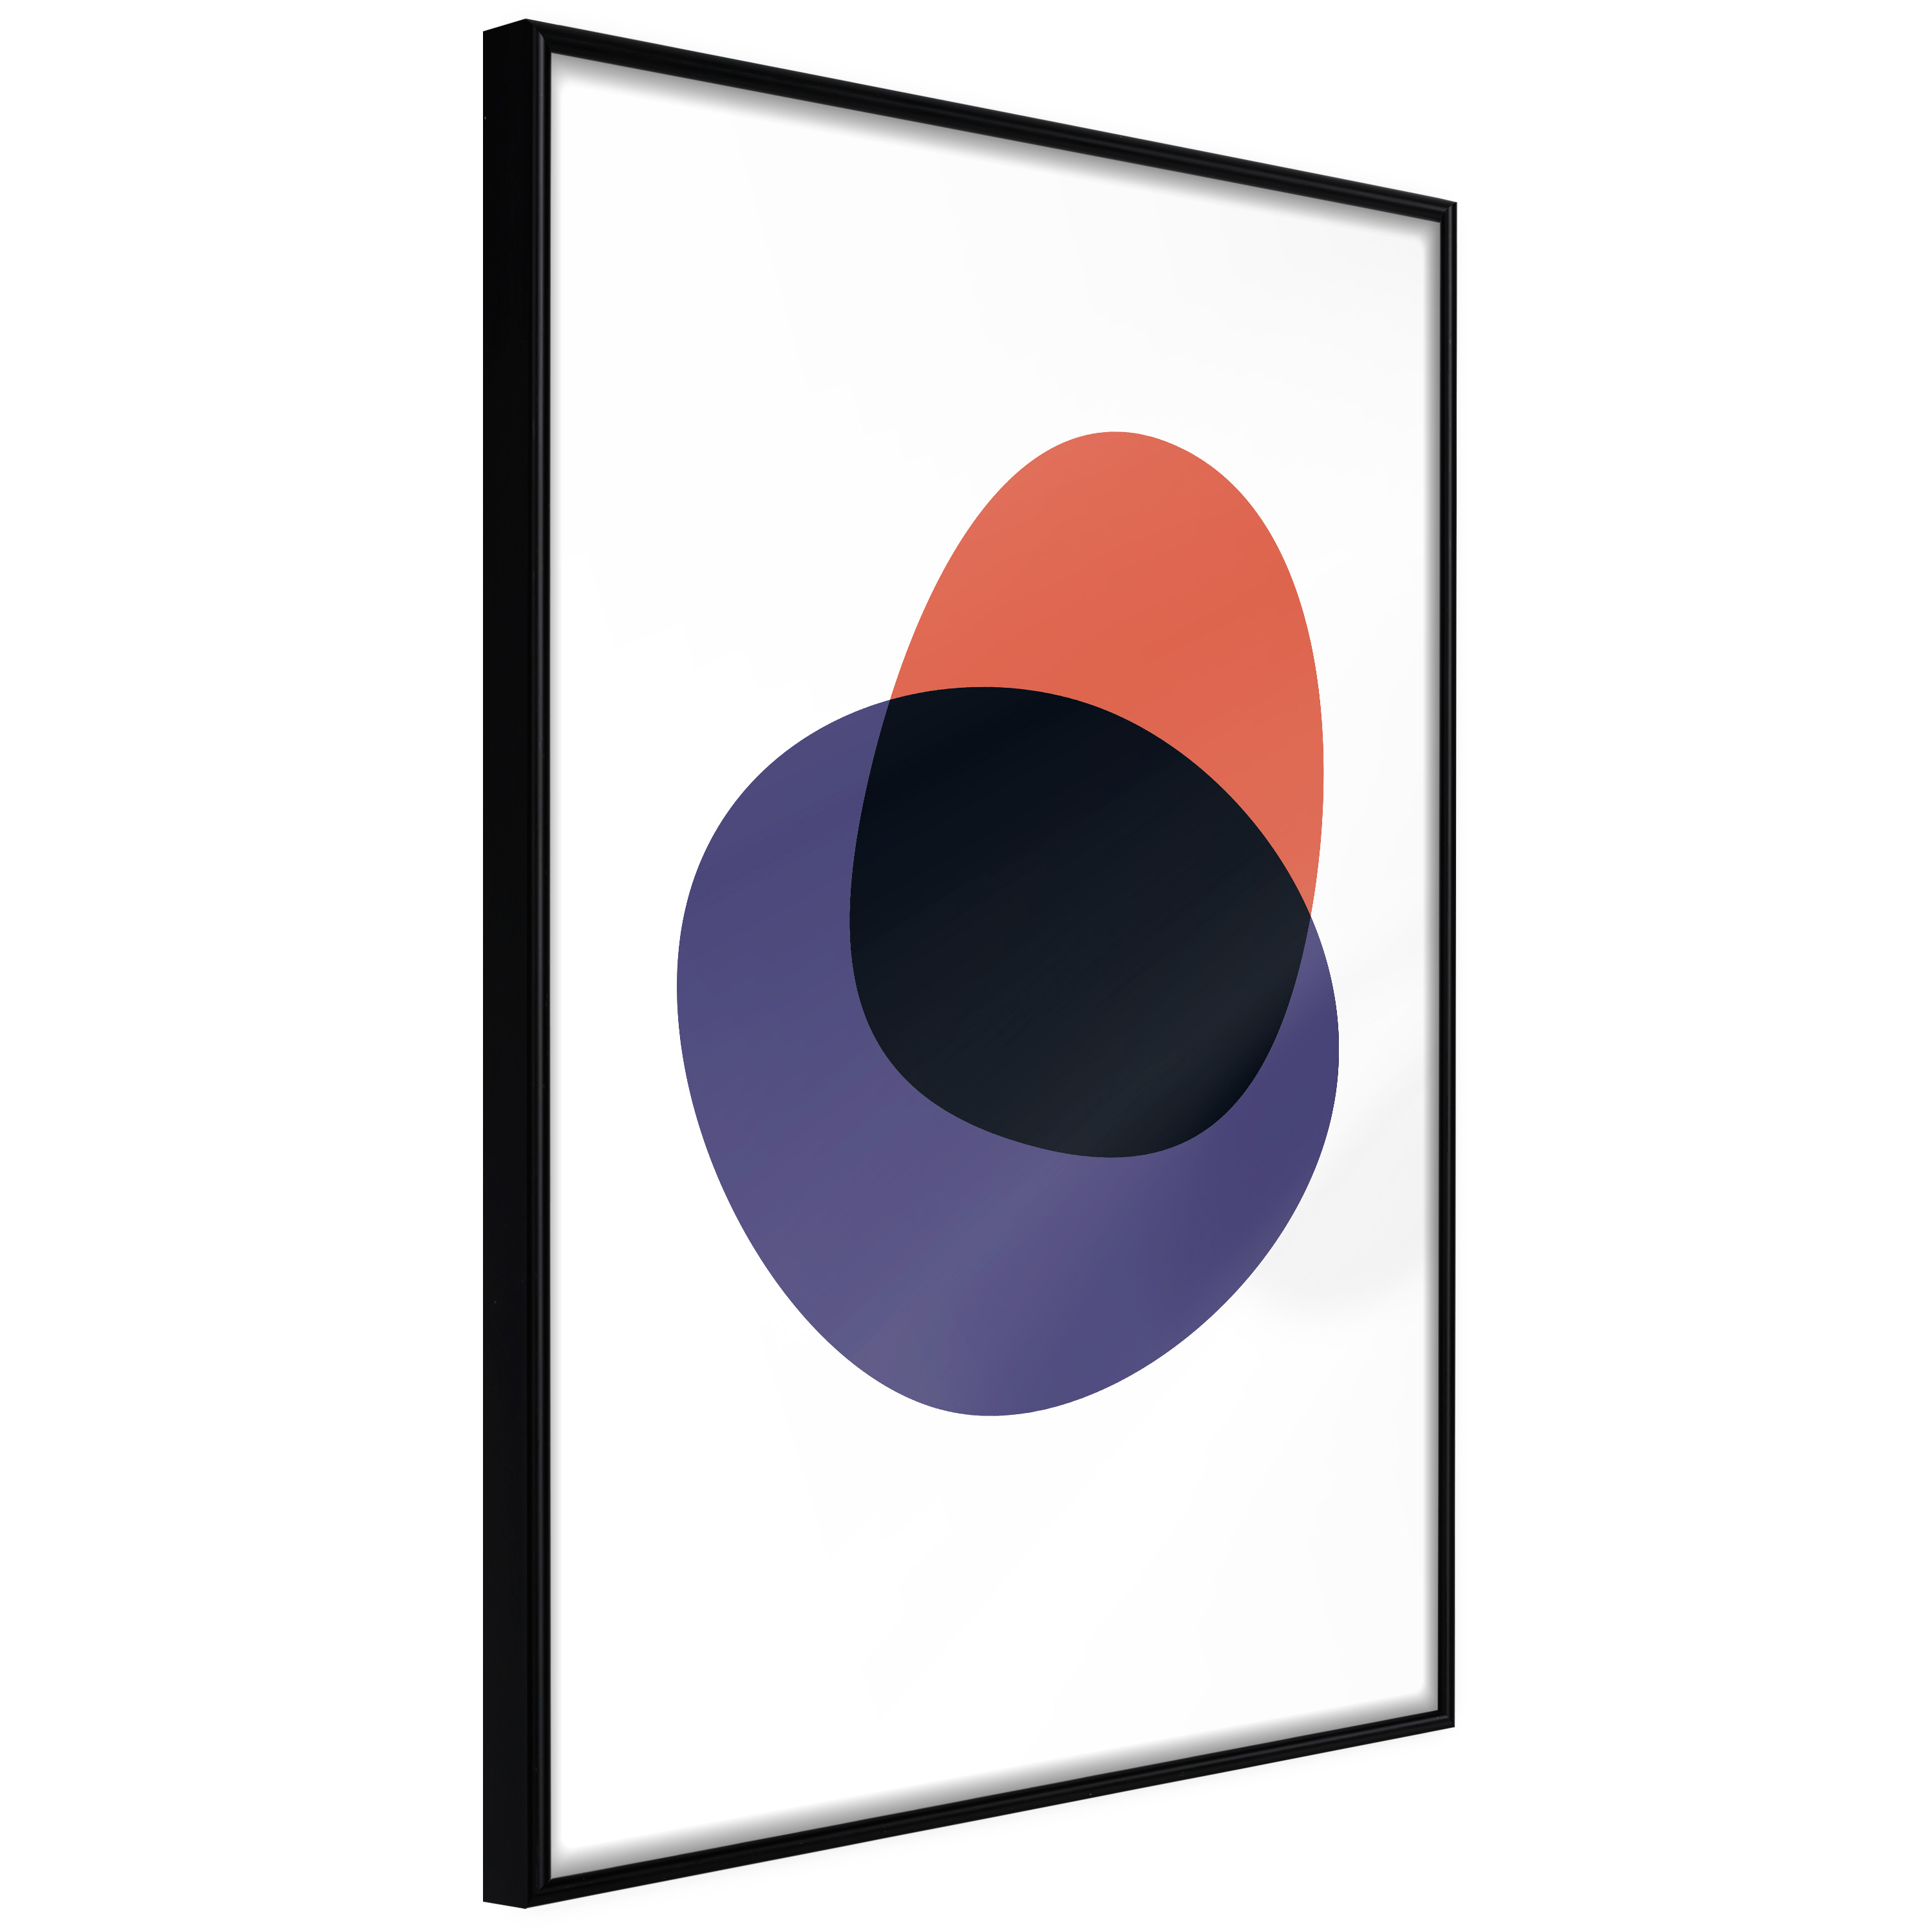 Poster - White, Orange, Violet and Black - 20x30